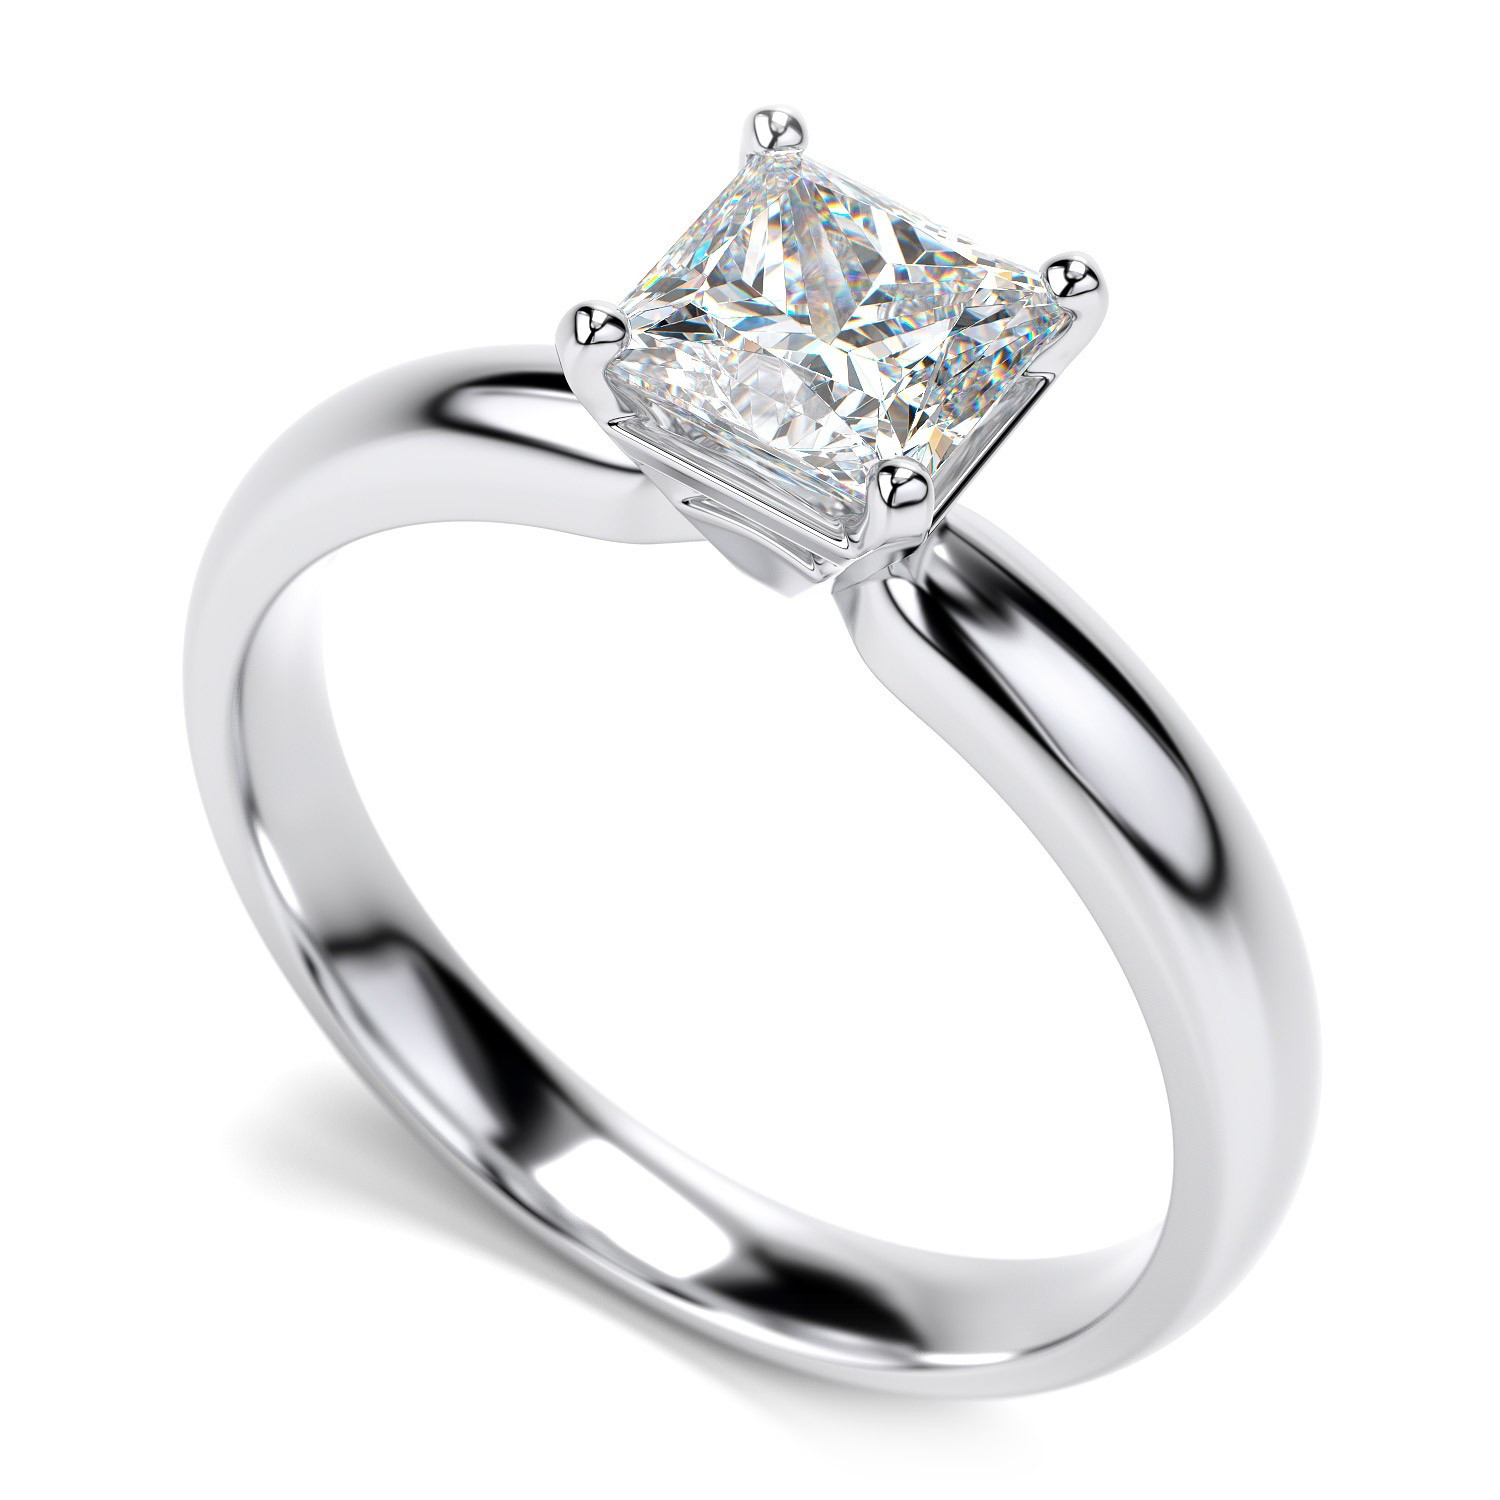 Princess Cut White Gold Engagement Ring
 14K White Gold Diamond Princess Cut Solitaire Engagement